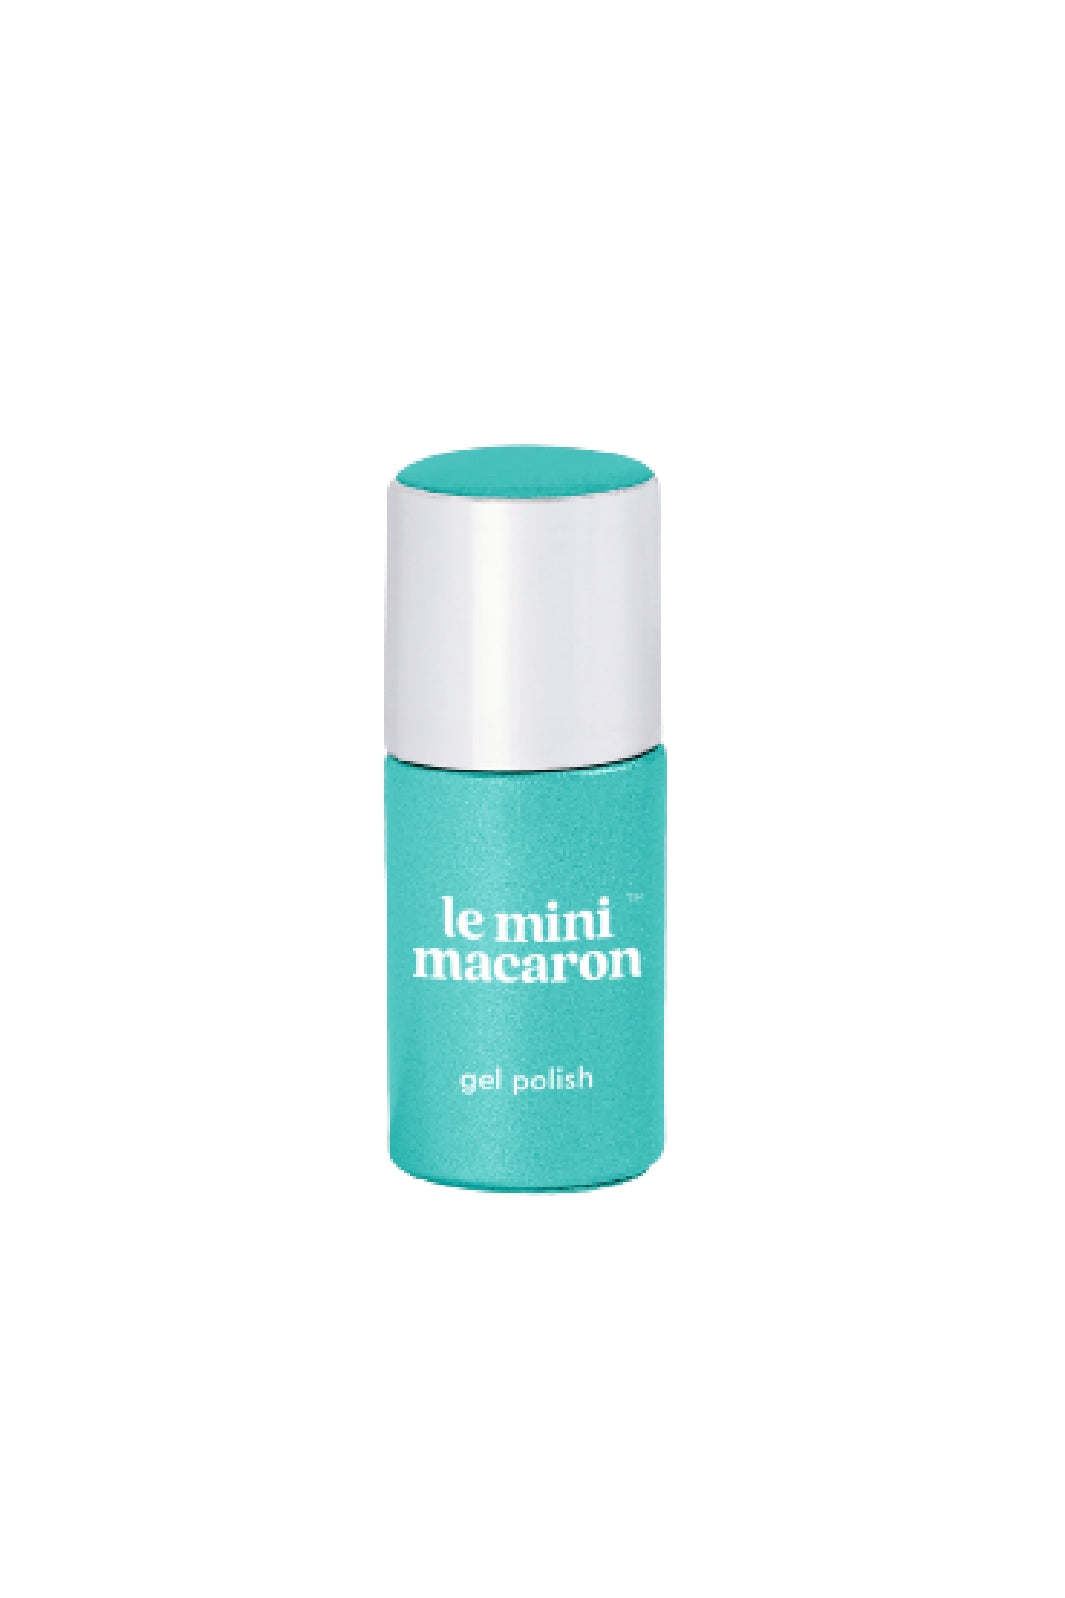 Le Mini Macaron - Neglelak Gel - Sparkling Sea Salt Glitter Nail Polishes 